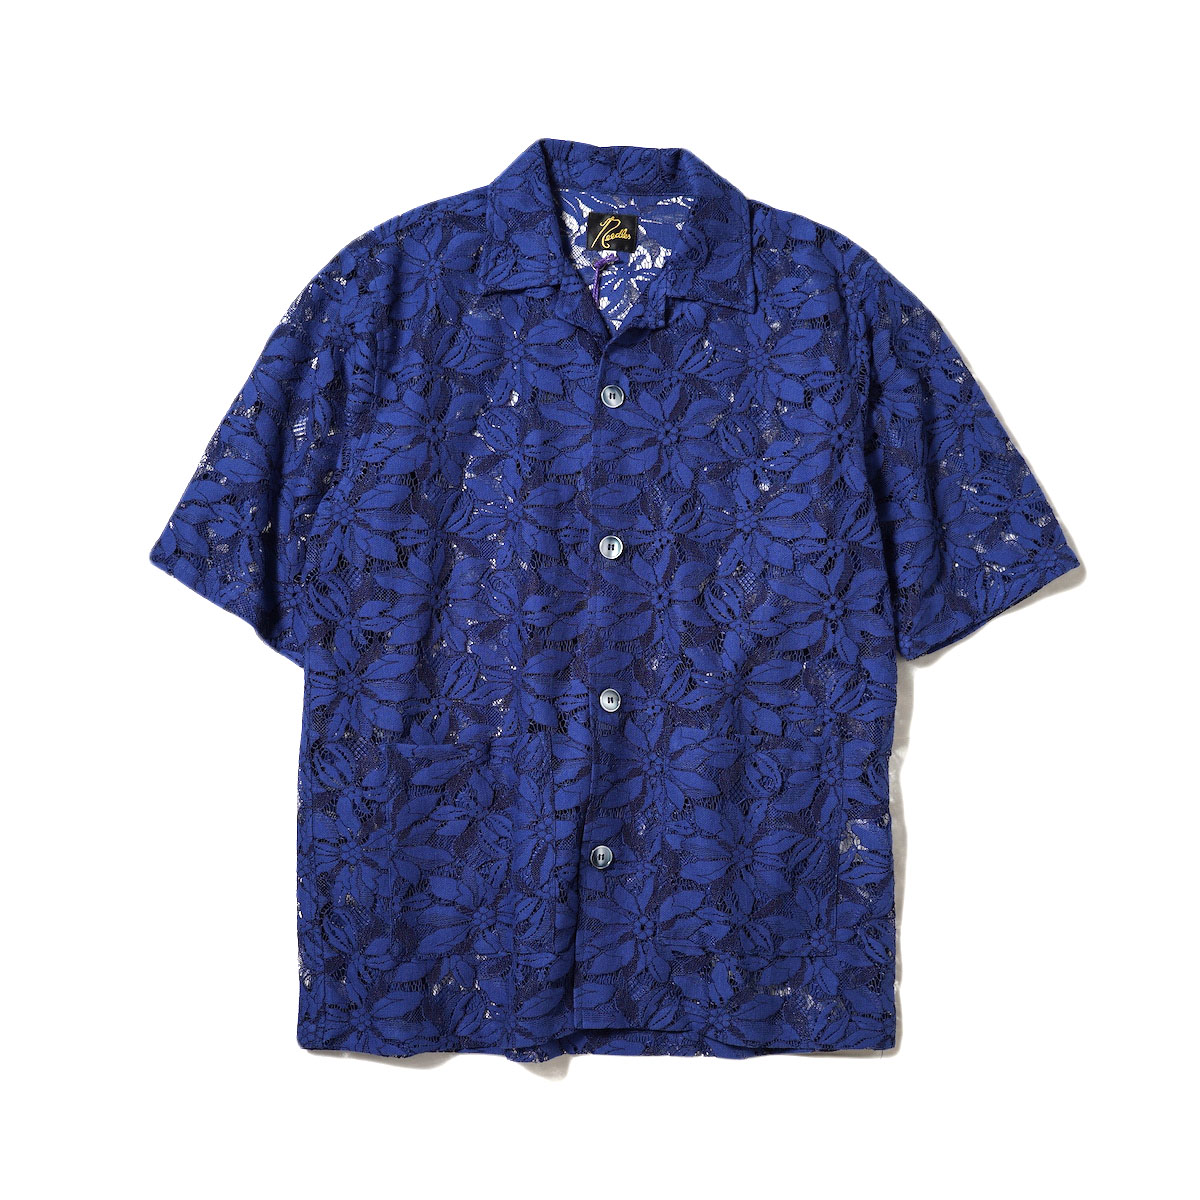 Needles / Cabana Shirt - C/PE/R Lace Cloth / Flower (Navy)